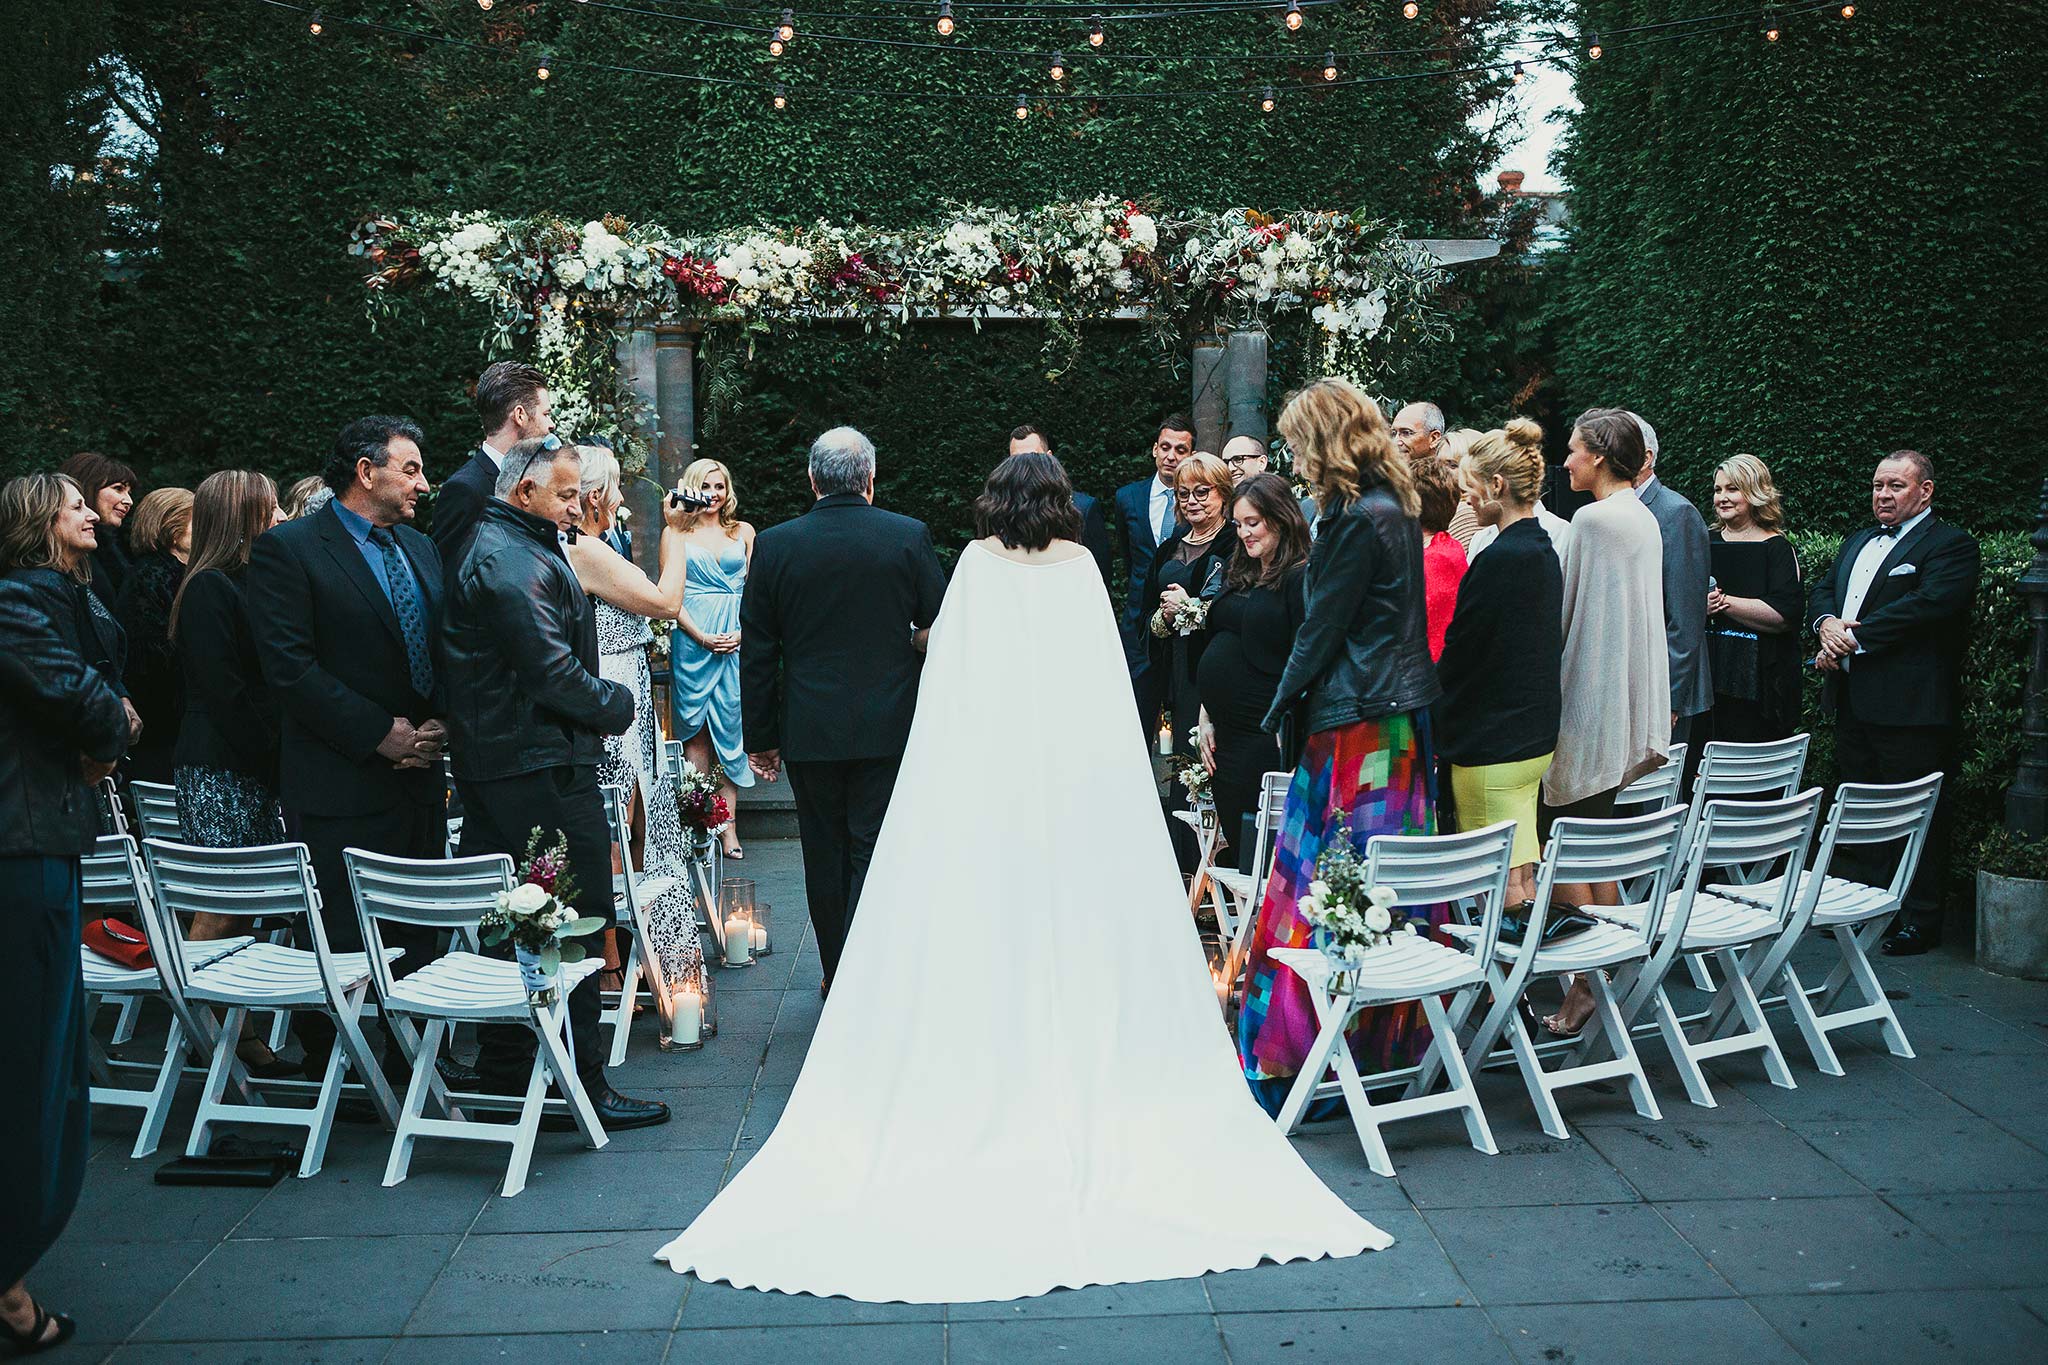 quat-quatta-night-wedding-ceremony-bridal-entrance